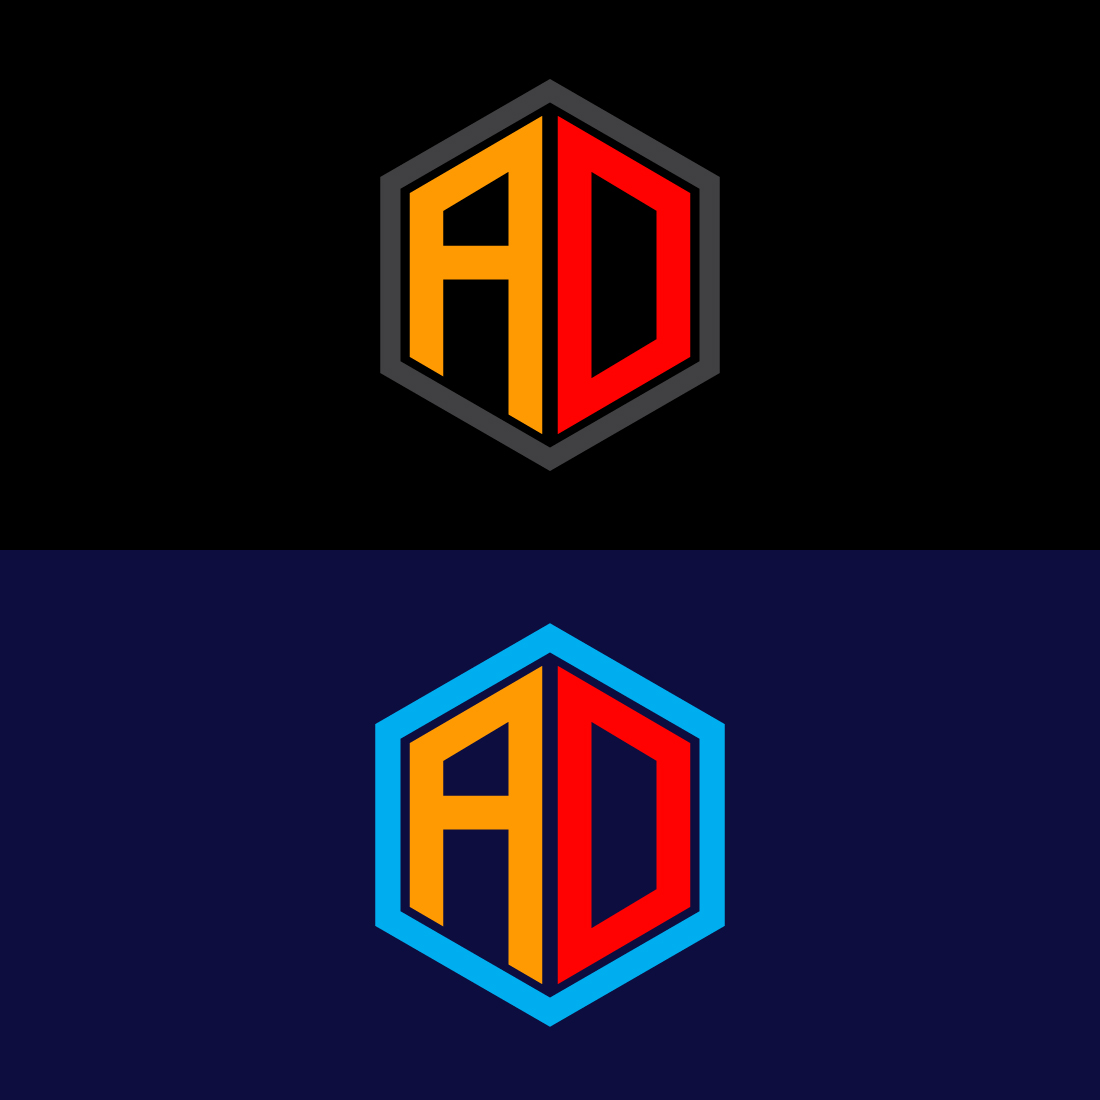 AD Logo Design cover image.